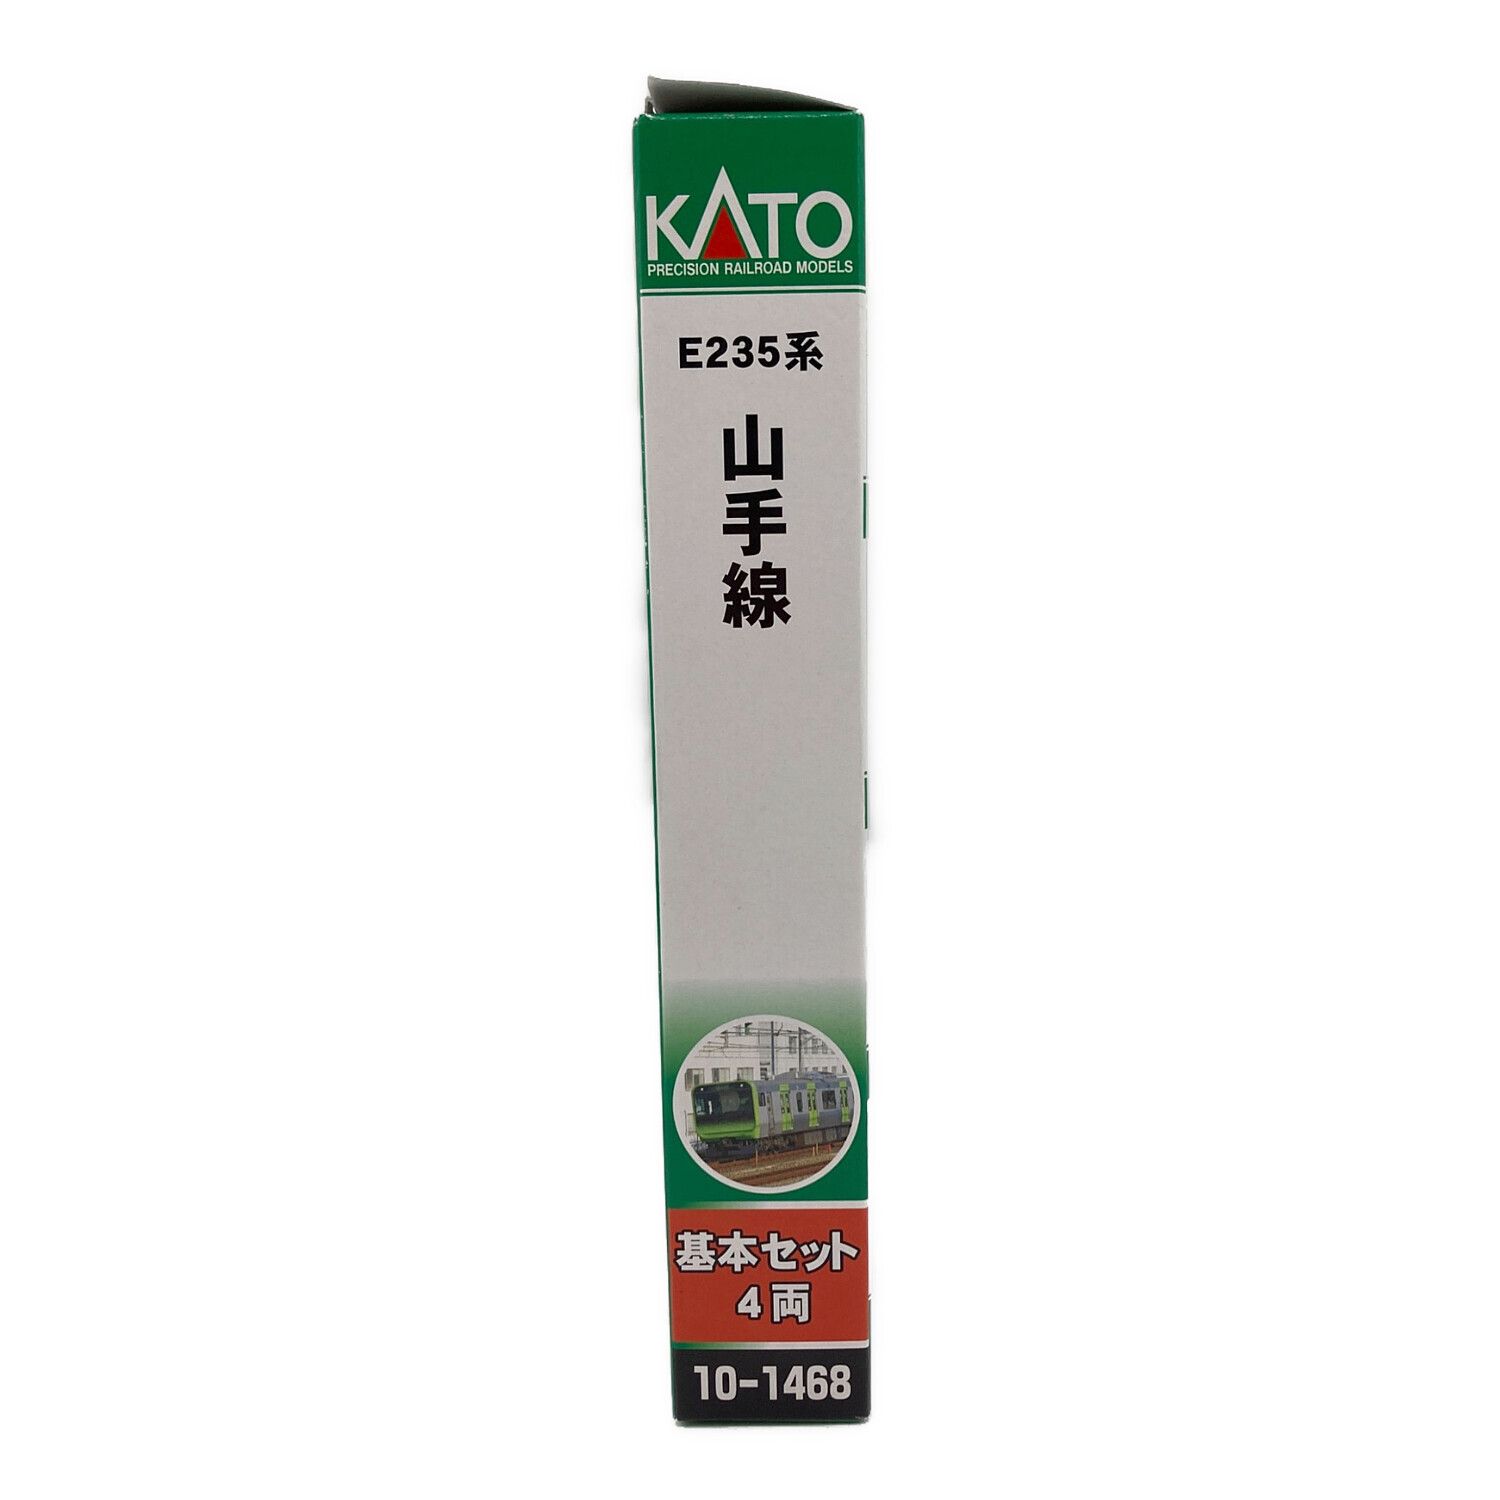 KATO (カトー) Nゲージ 10-1468 E235系 山手線 基本セット 4両